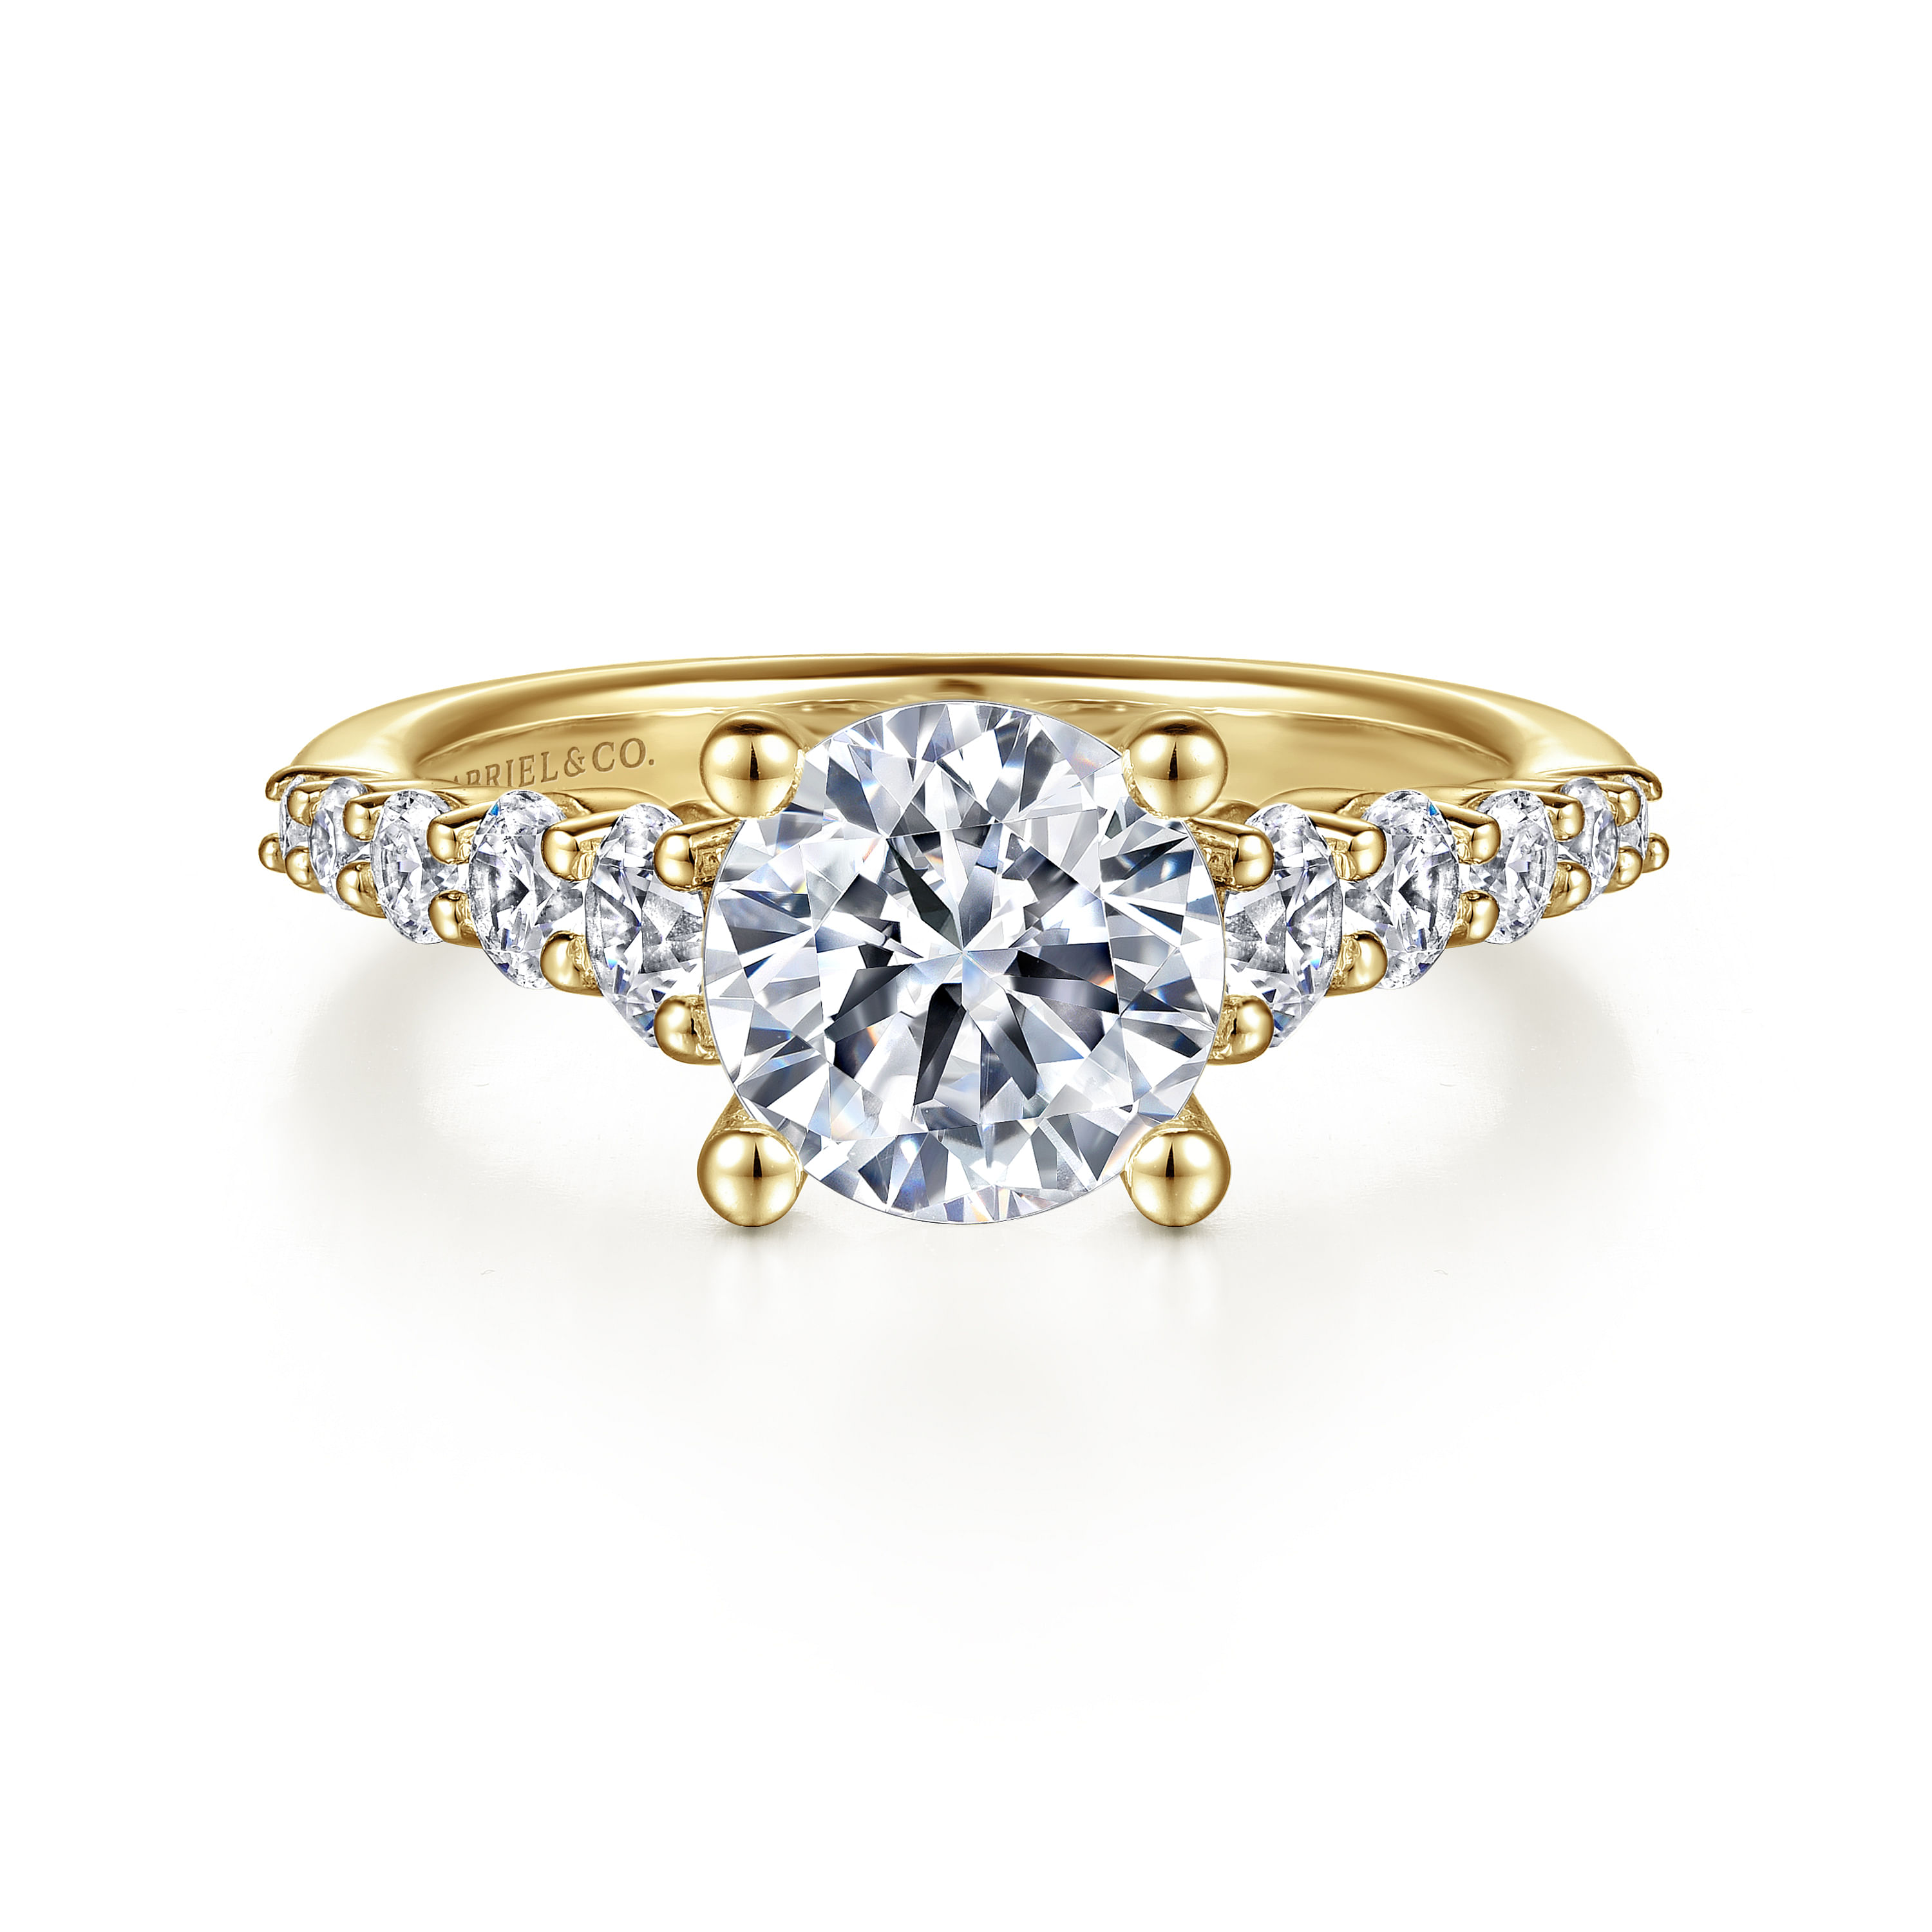 Reed---14K-Yellow-Gold-Round-Diamond-Engagement-Ring1